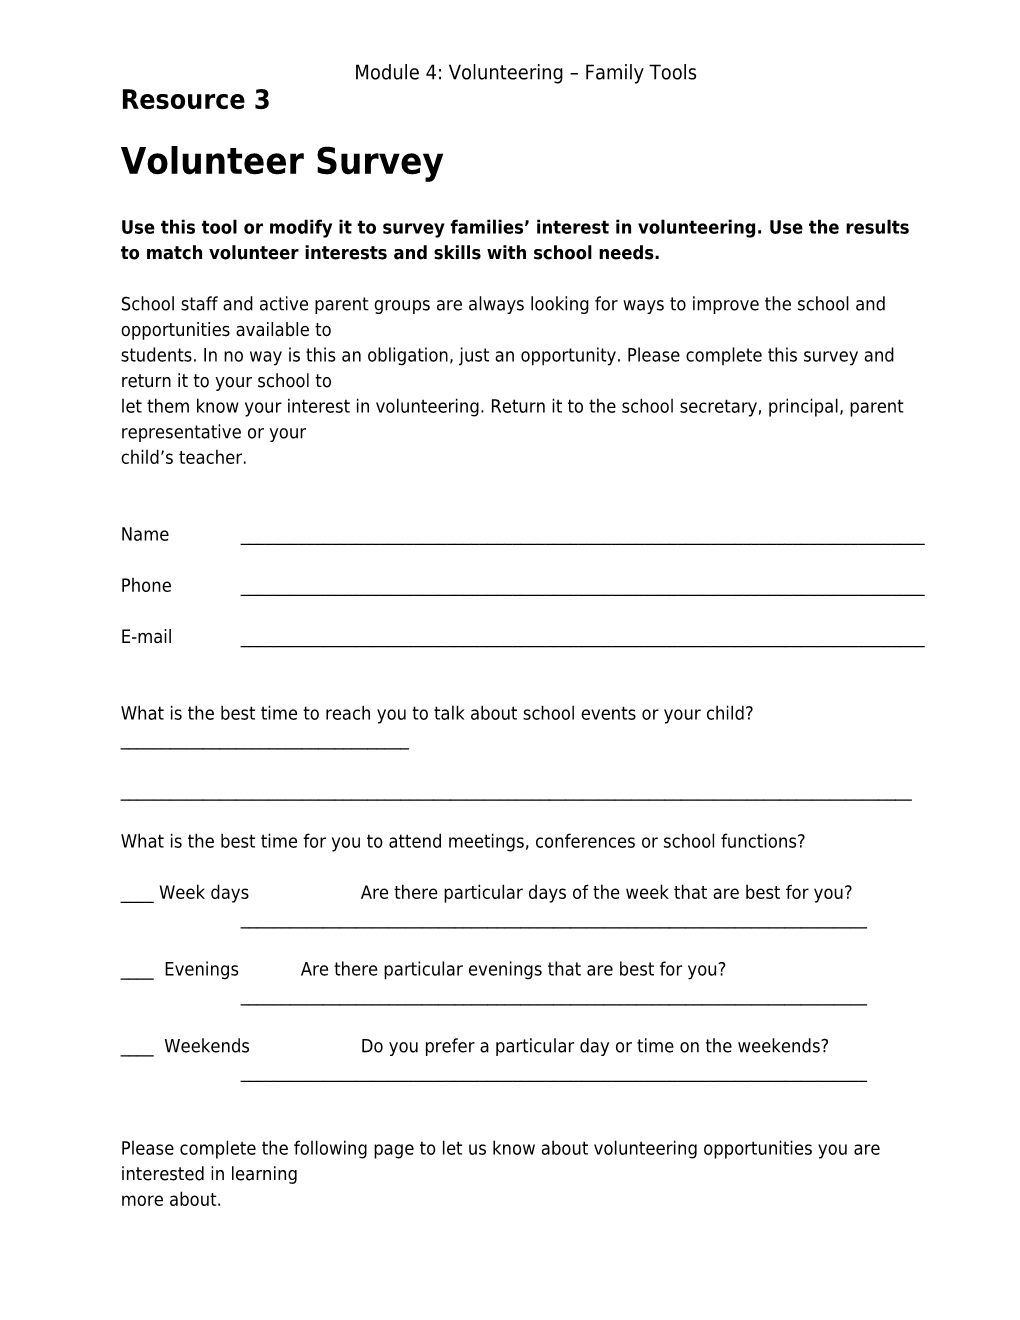 Module 4: Volunteering Family Tools